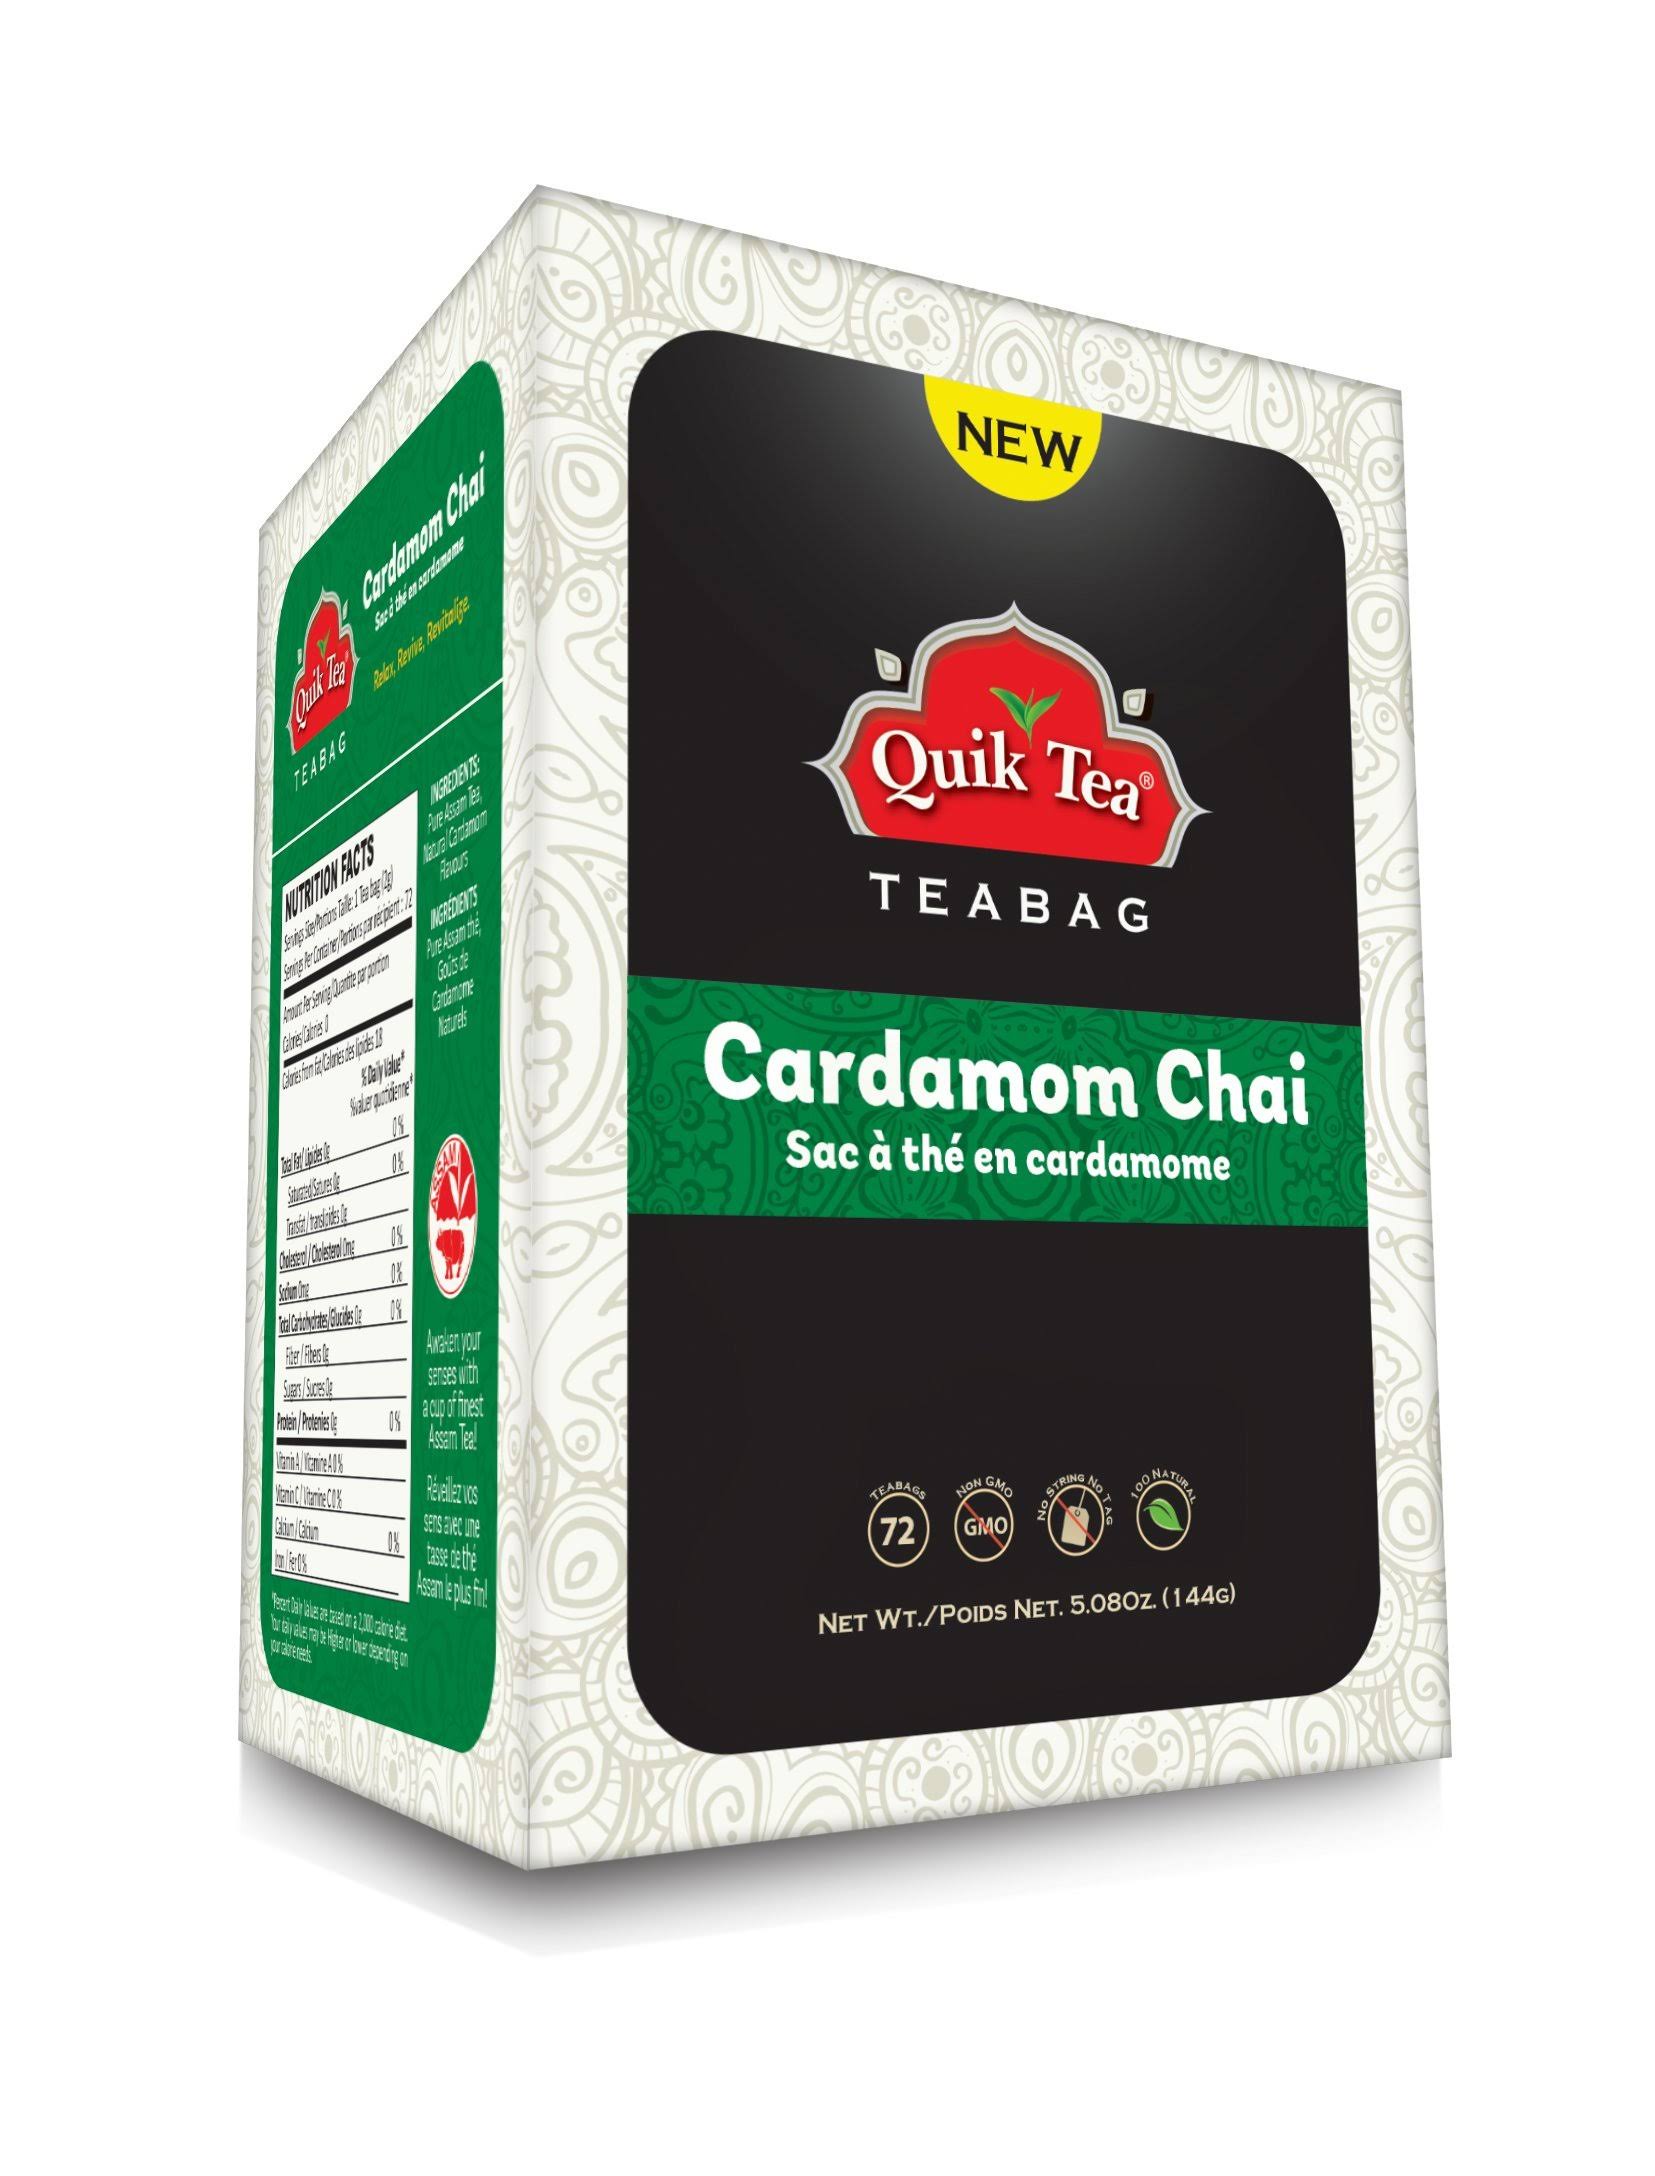 QuikTea Cardamom Chai Tea Bags - 72 Count Single Box - All Natural Pre